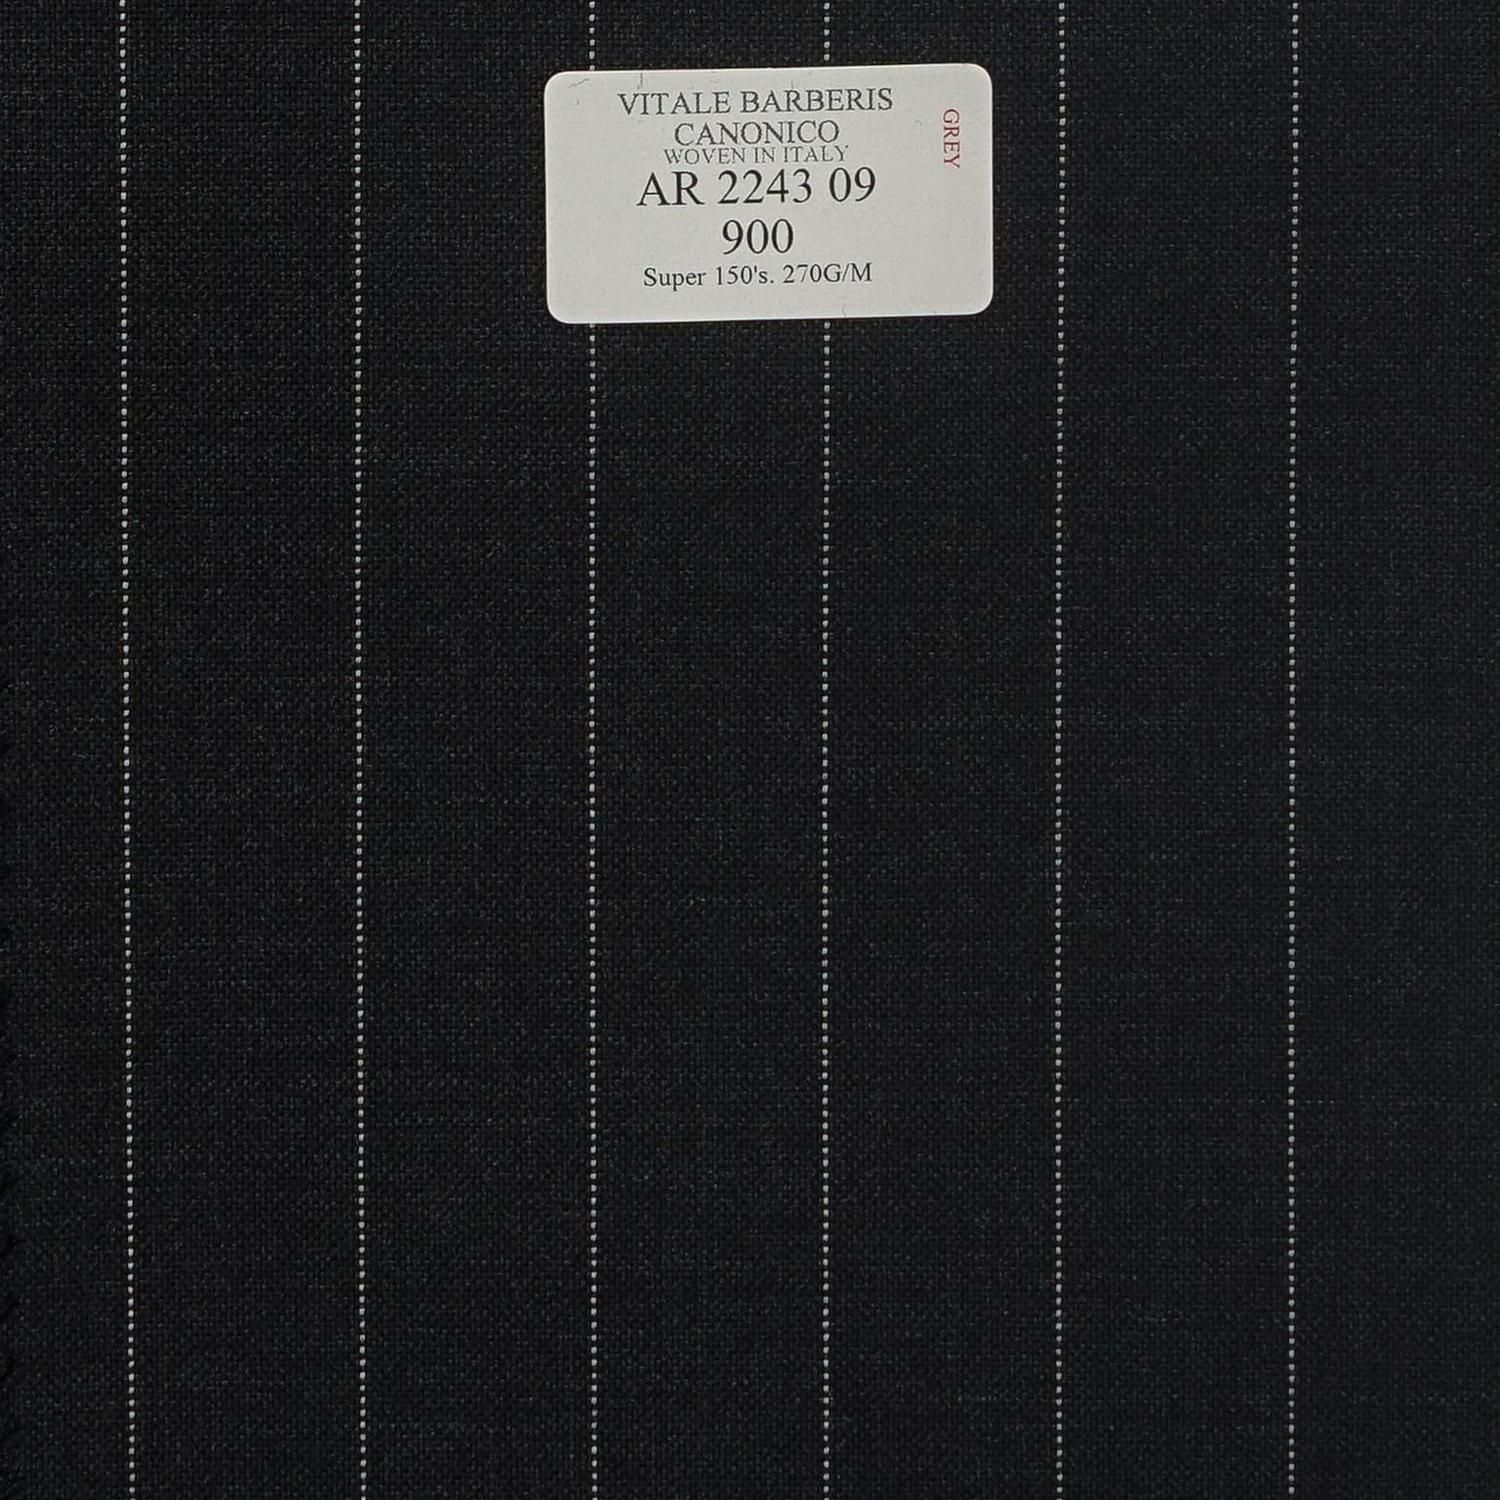 AR 2243 09 CANONICO - 100% Wool - Xám Sọc